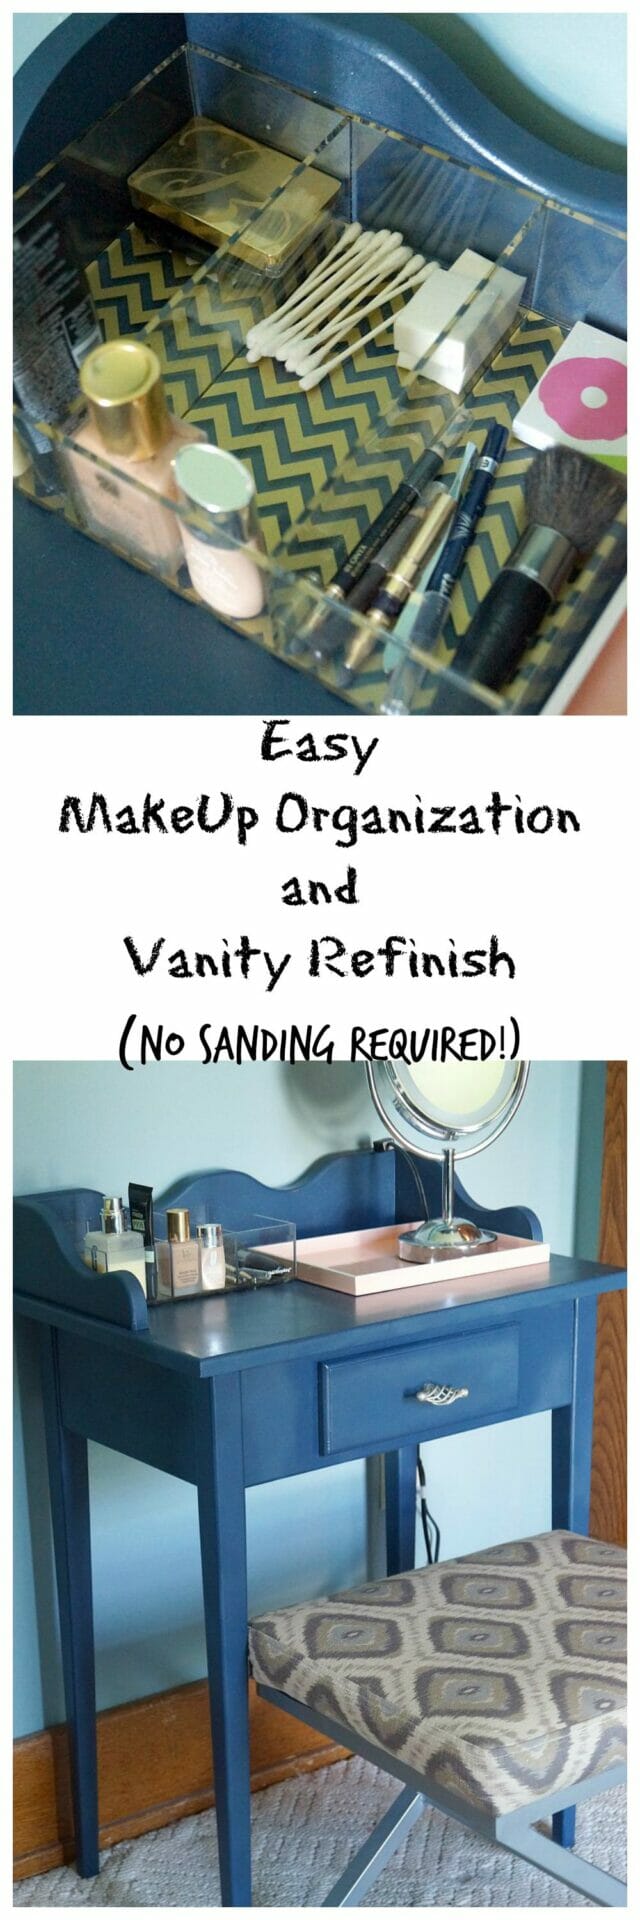  Make Up Organization and Vanity Refinish-No Sanding Required! 